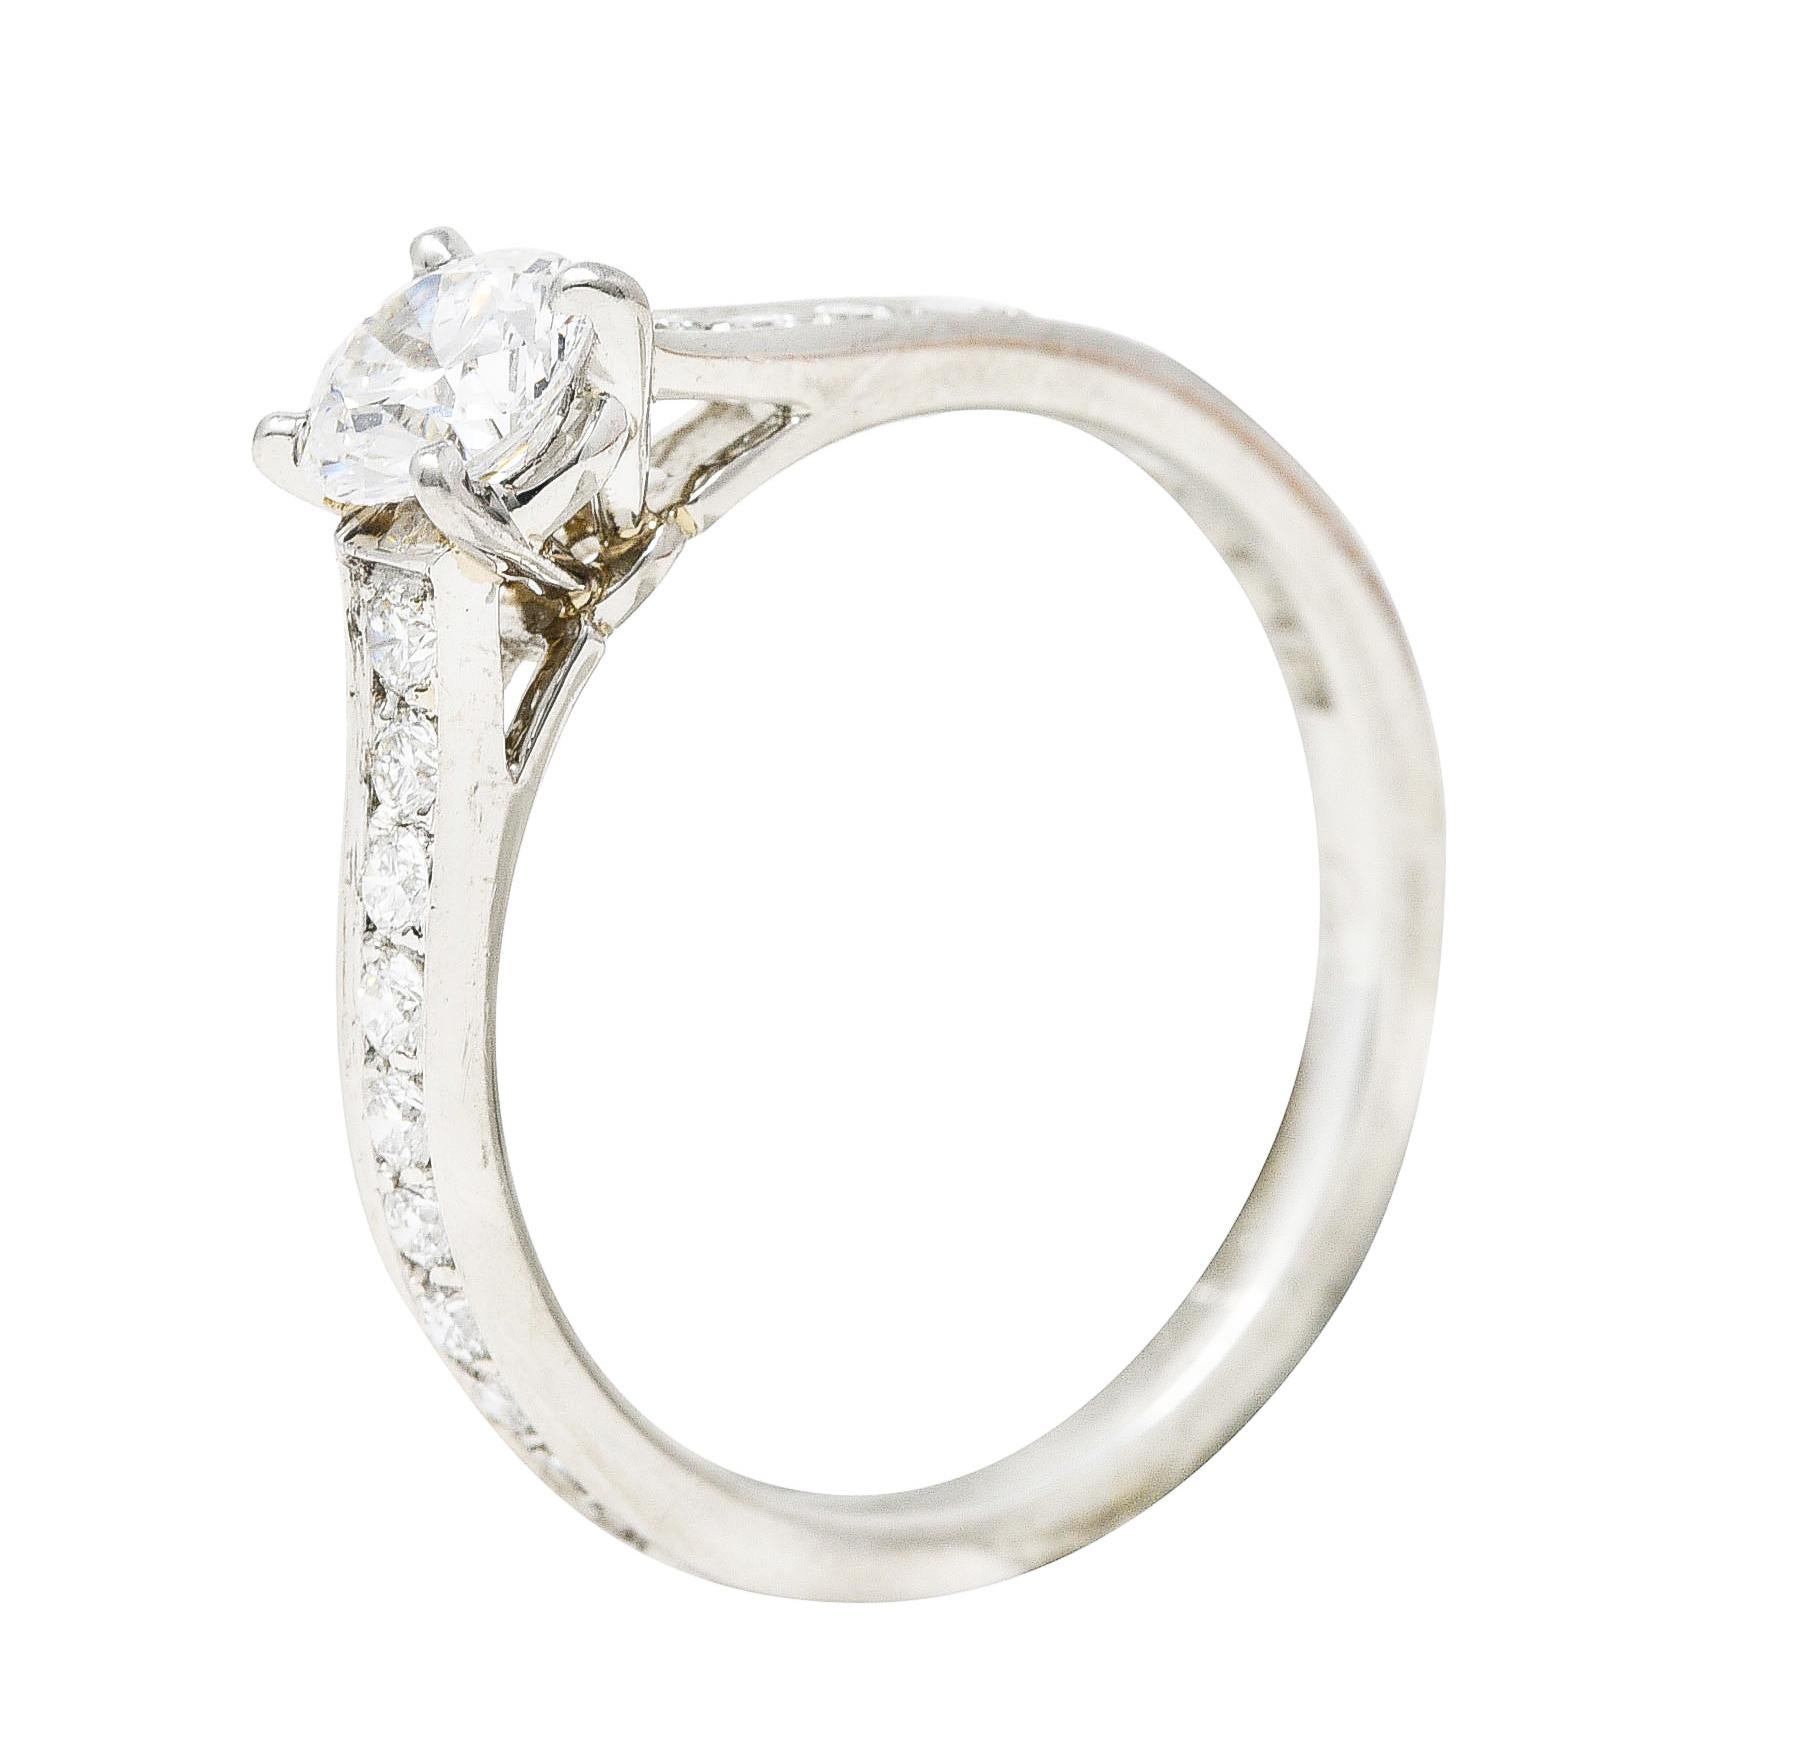 Cartier French Contemporary 0.42 Carat Diamond Platinum Engagement Ring GIA 4